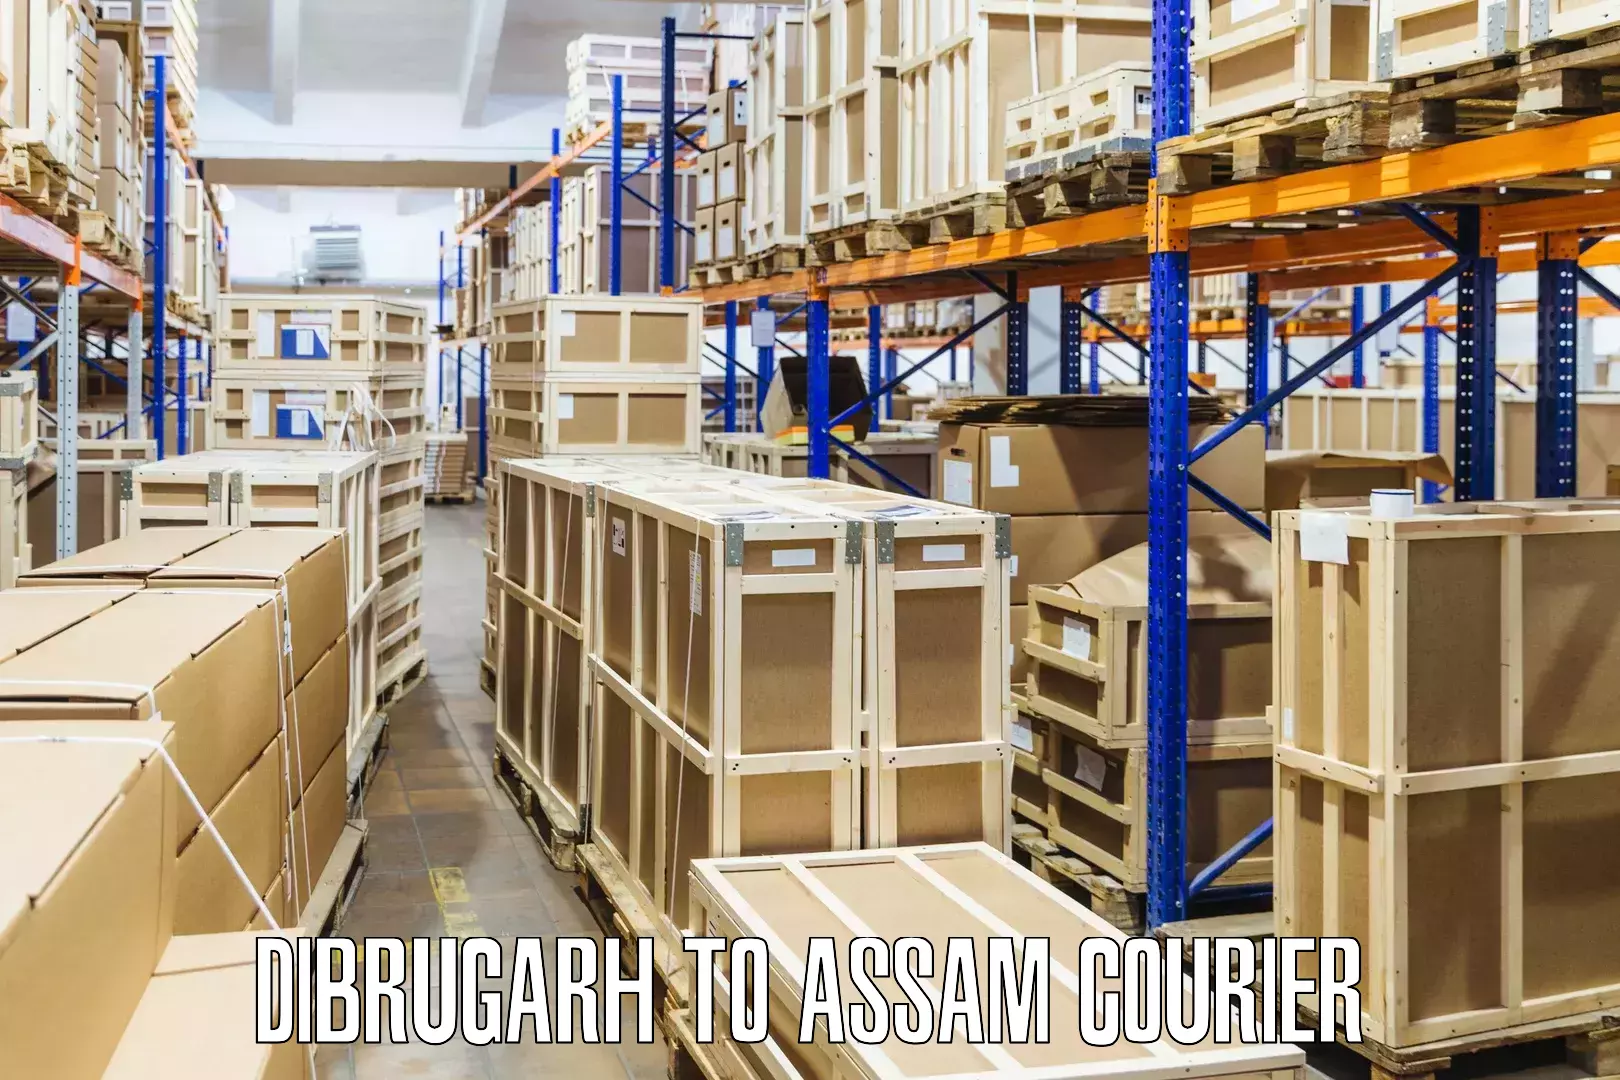 Nationwide shipping capabilities Dibrugarh to Nagaon